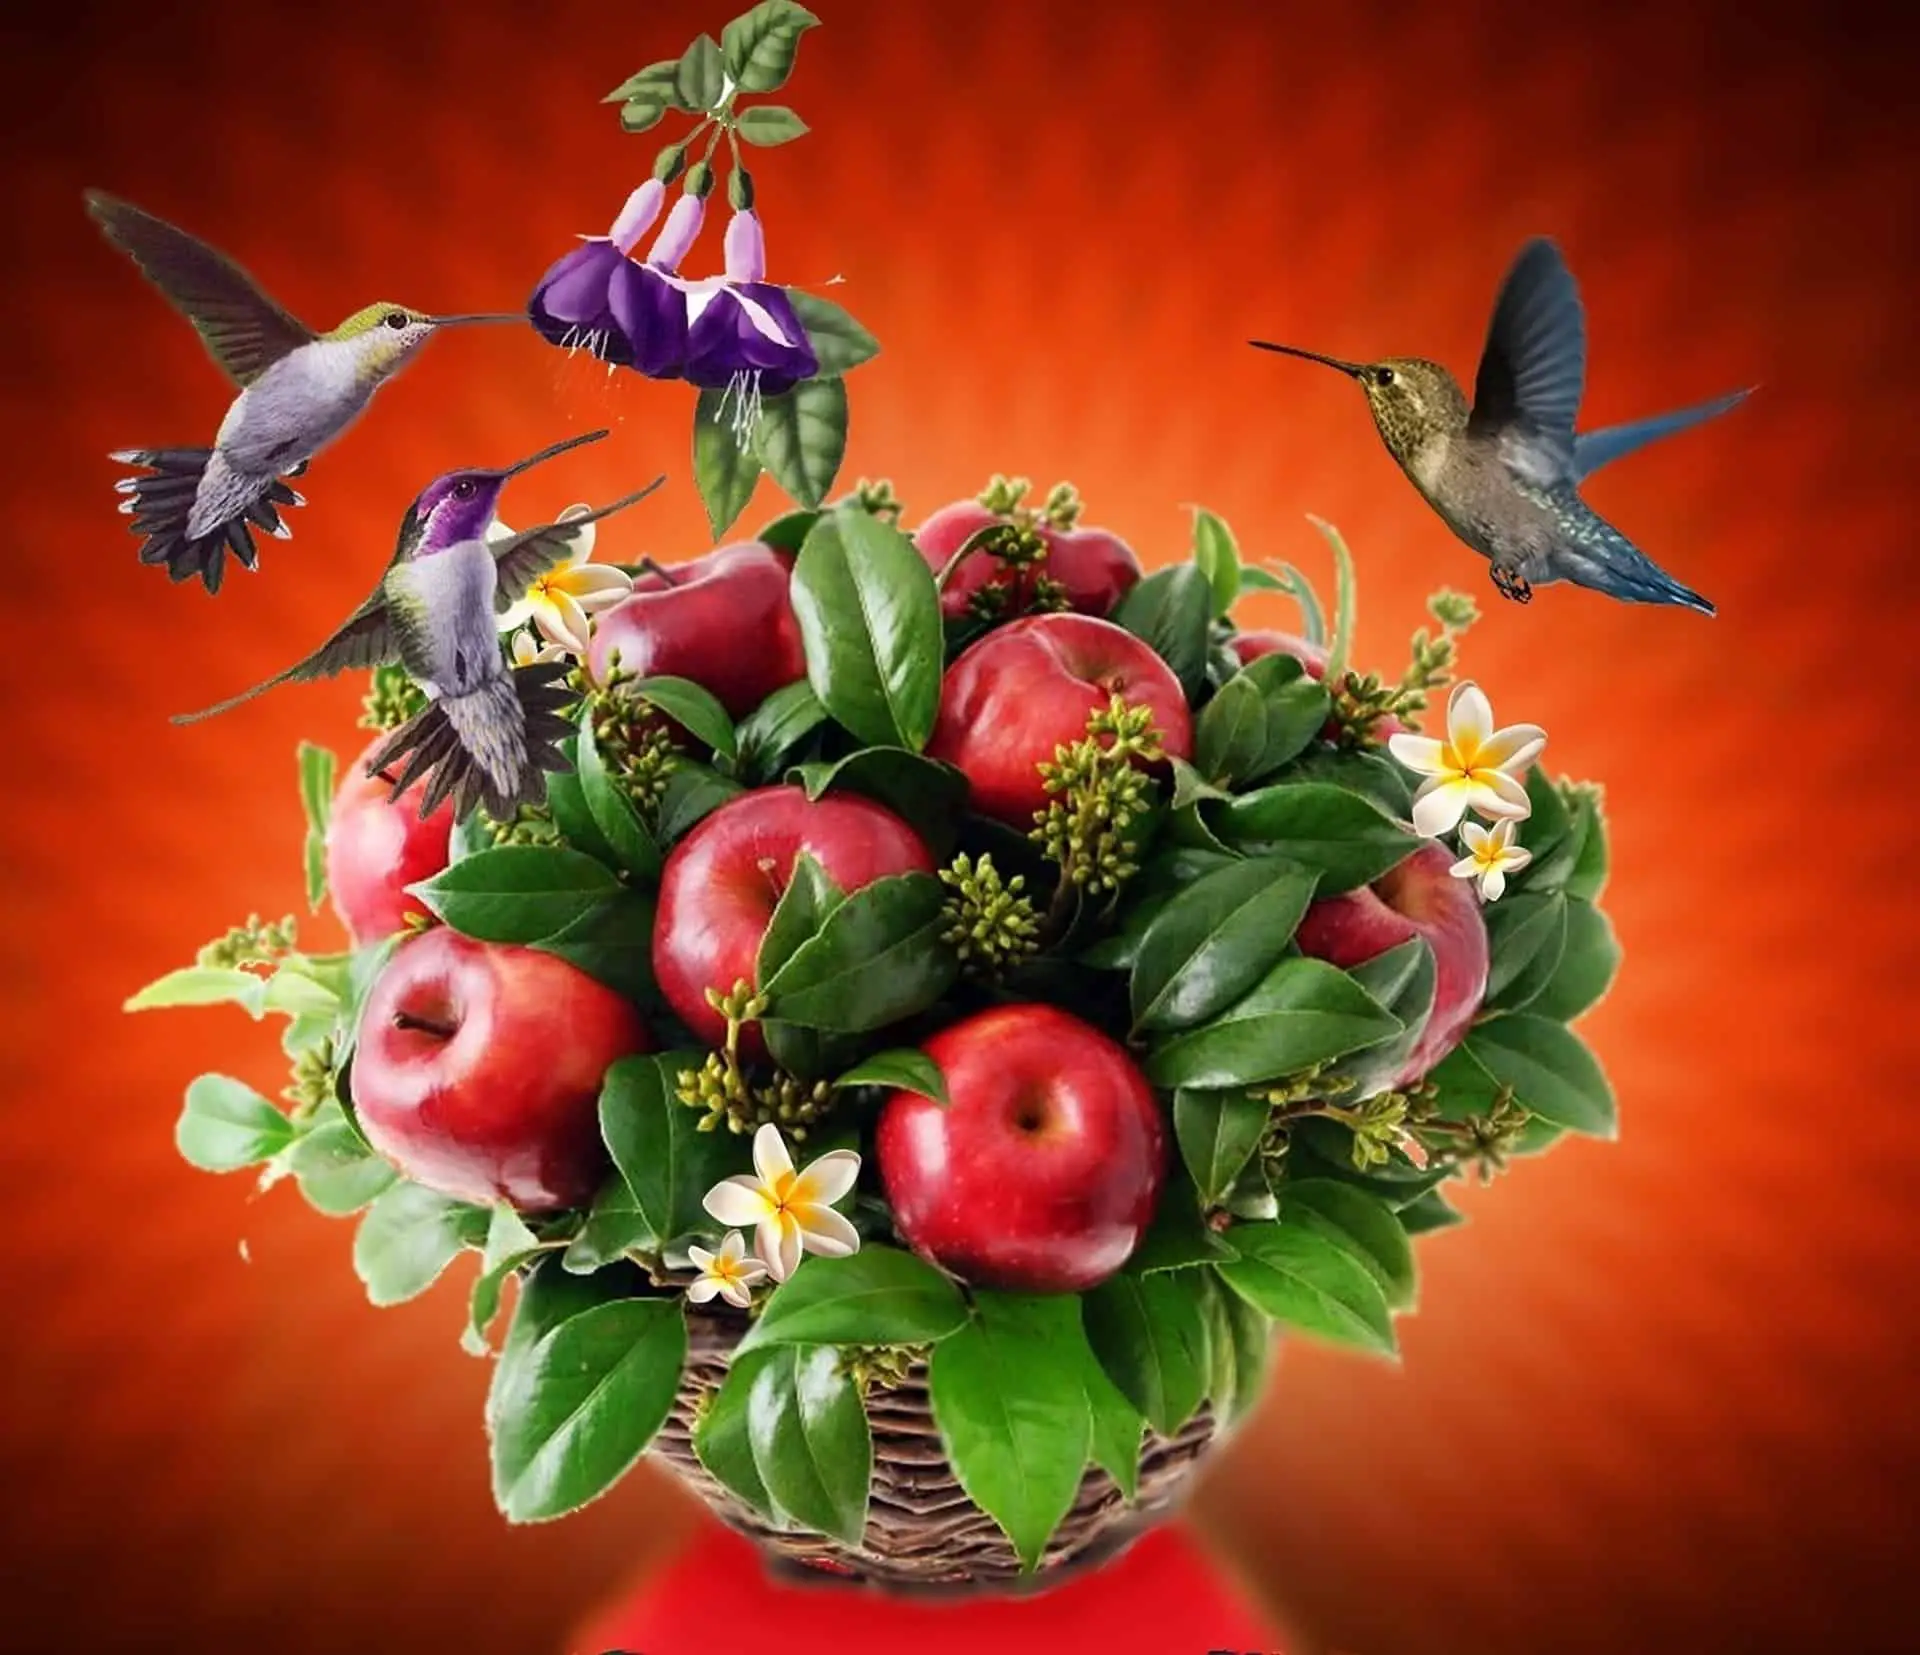 Do Hummingbirds Eat Fruits